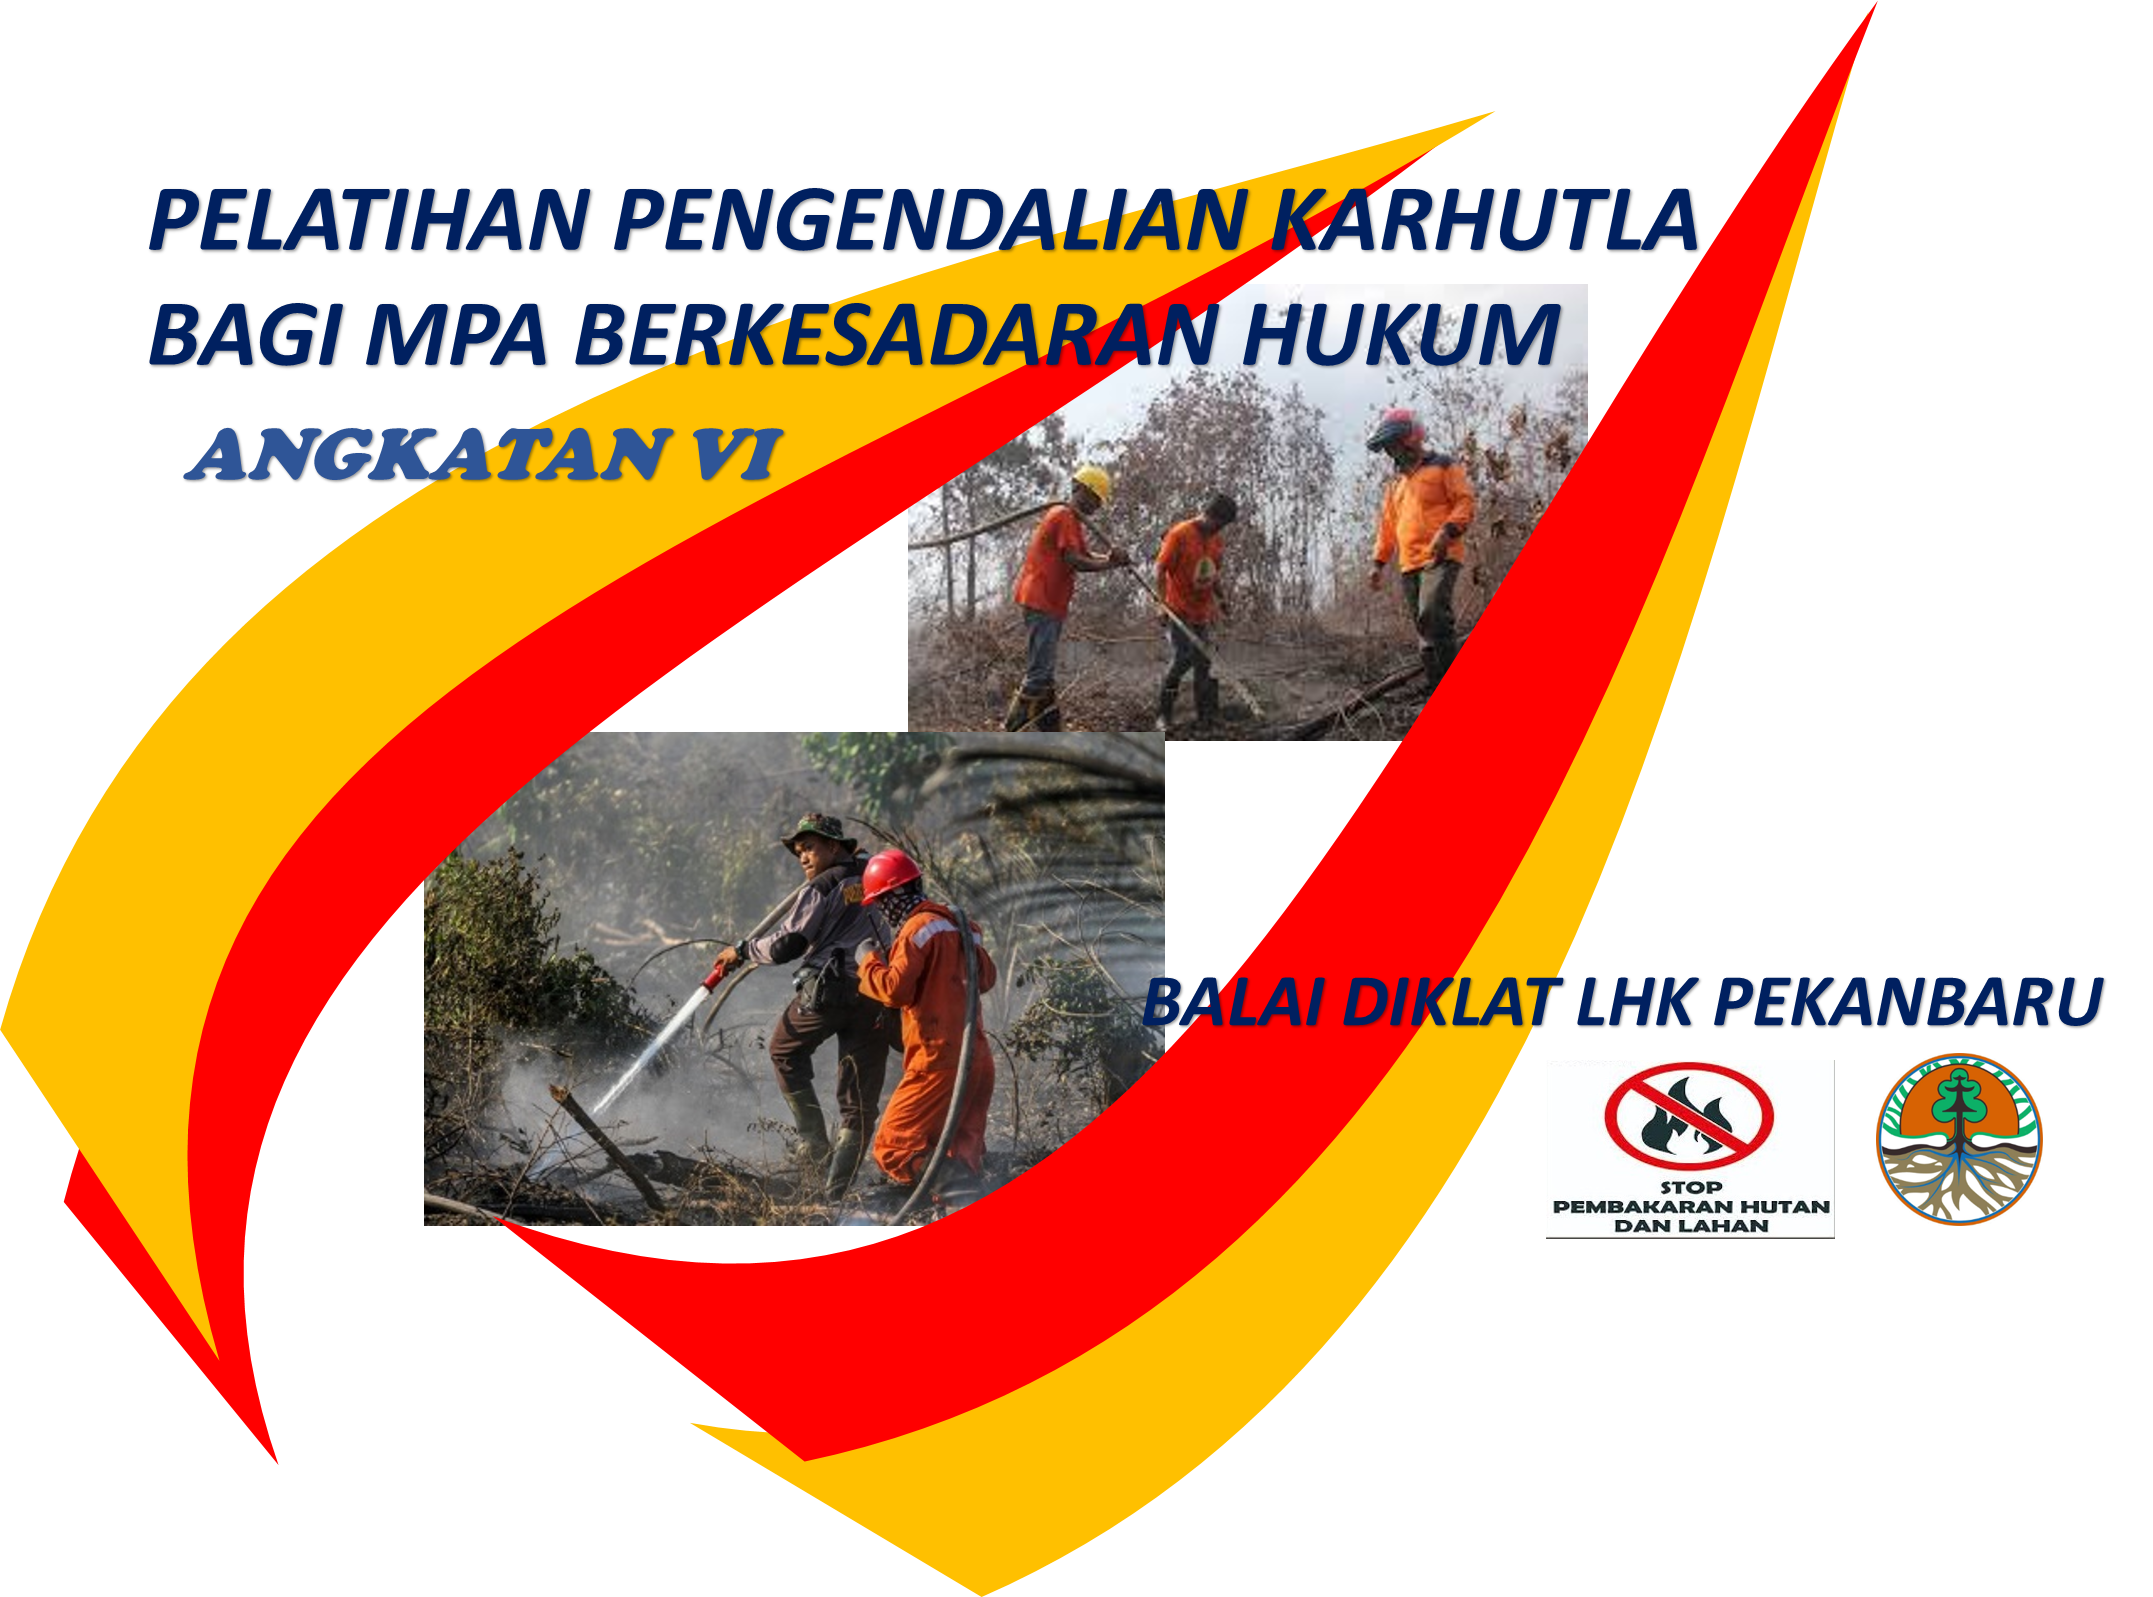  Pelatihan Pengendalian Kebakaran Hutan Dan Lahan  Bagi Masyarakat Peduli Api (MPA) Berkesadaran Hukum Angk. VI di BDLHK Pekanbaru